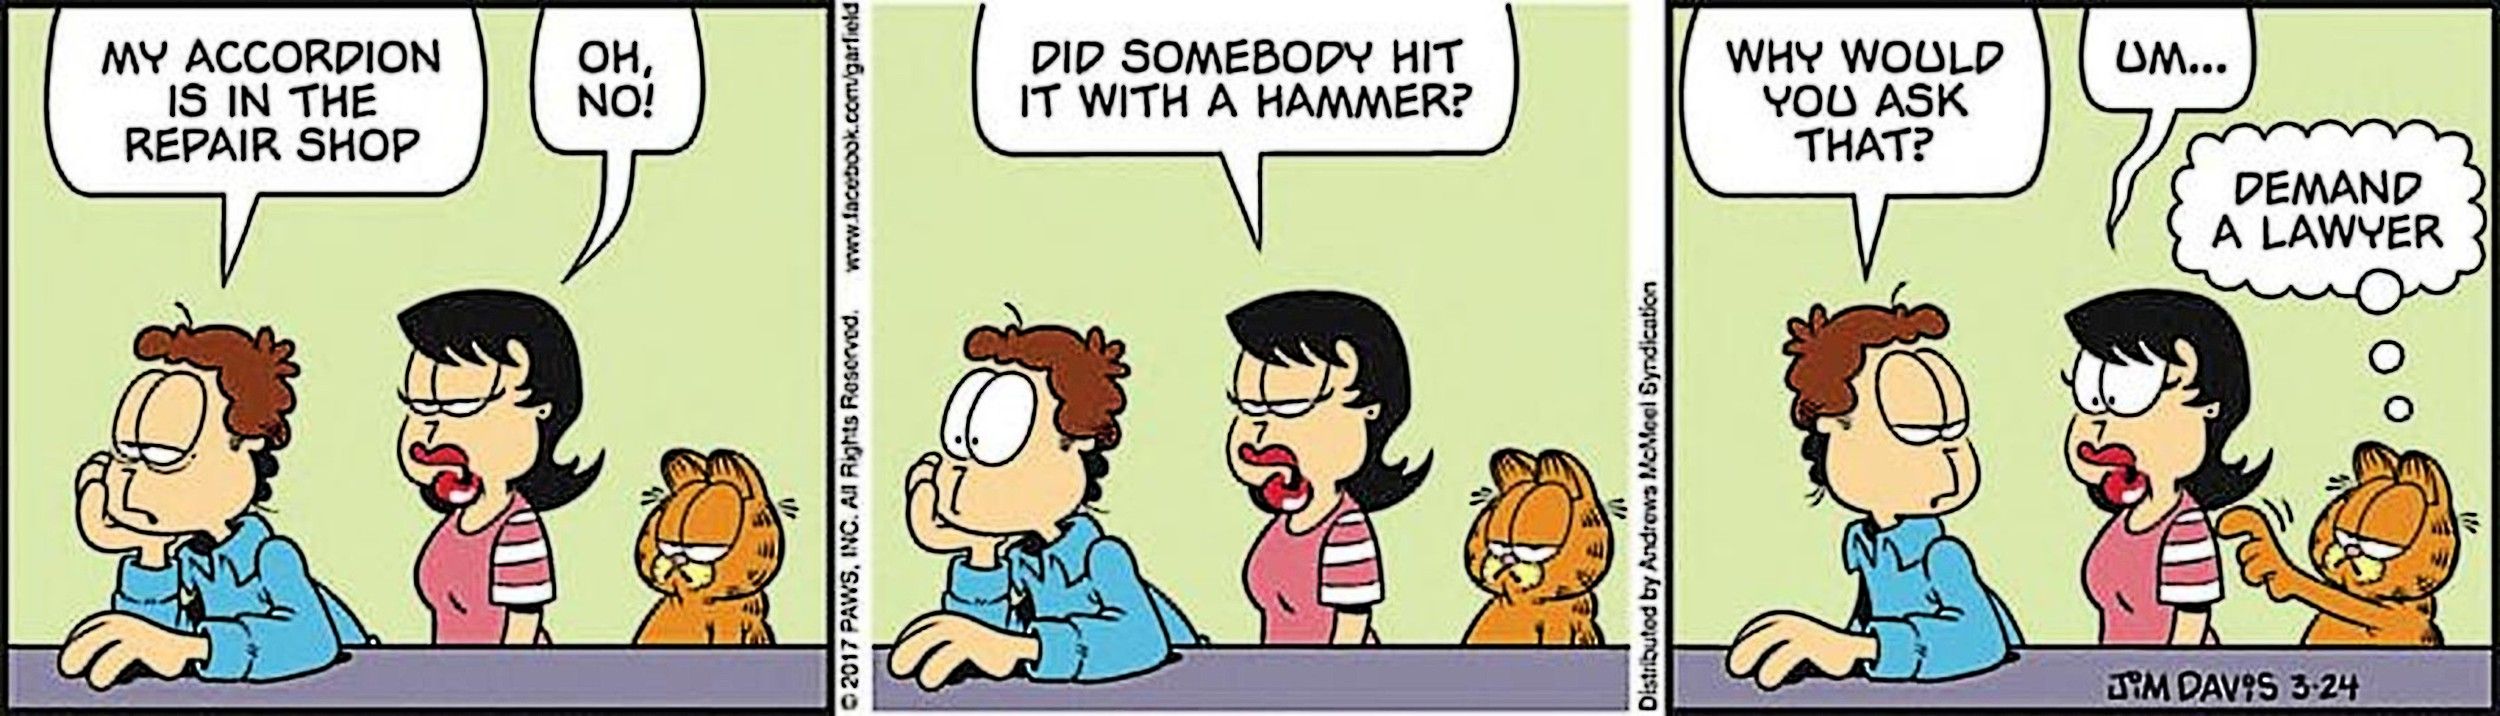 Garfield, Liz smashed Jon Arbuckle's accordion